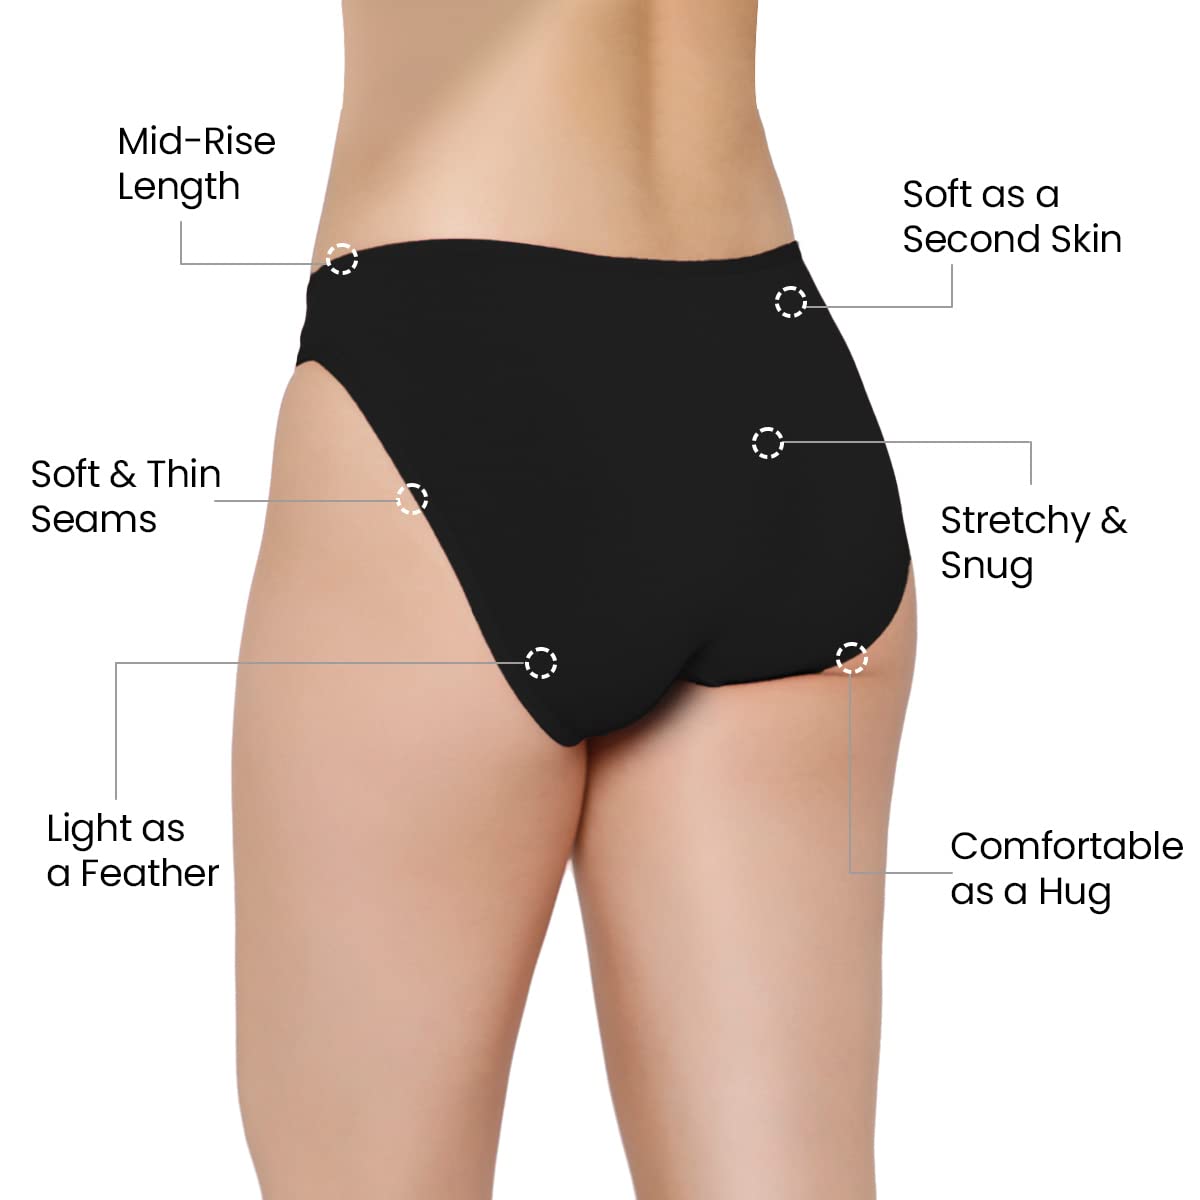 Mush Womens Ultra Soft Bamboo Modal Bikini Brief || Breathable Panties || Anti-Odor, Seamless, Anti Microbial Innerwear Pack of 2 (S, Black and Beige)